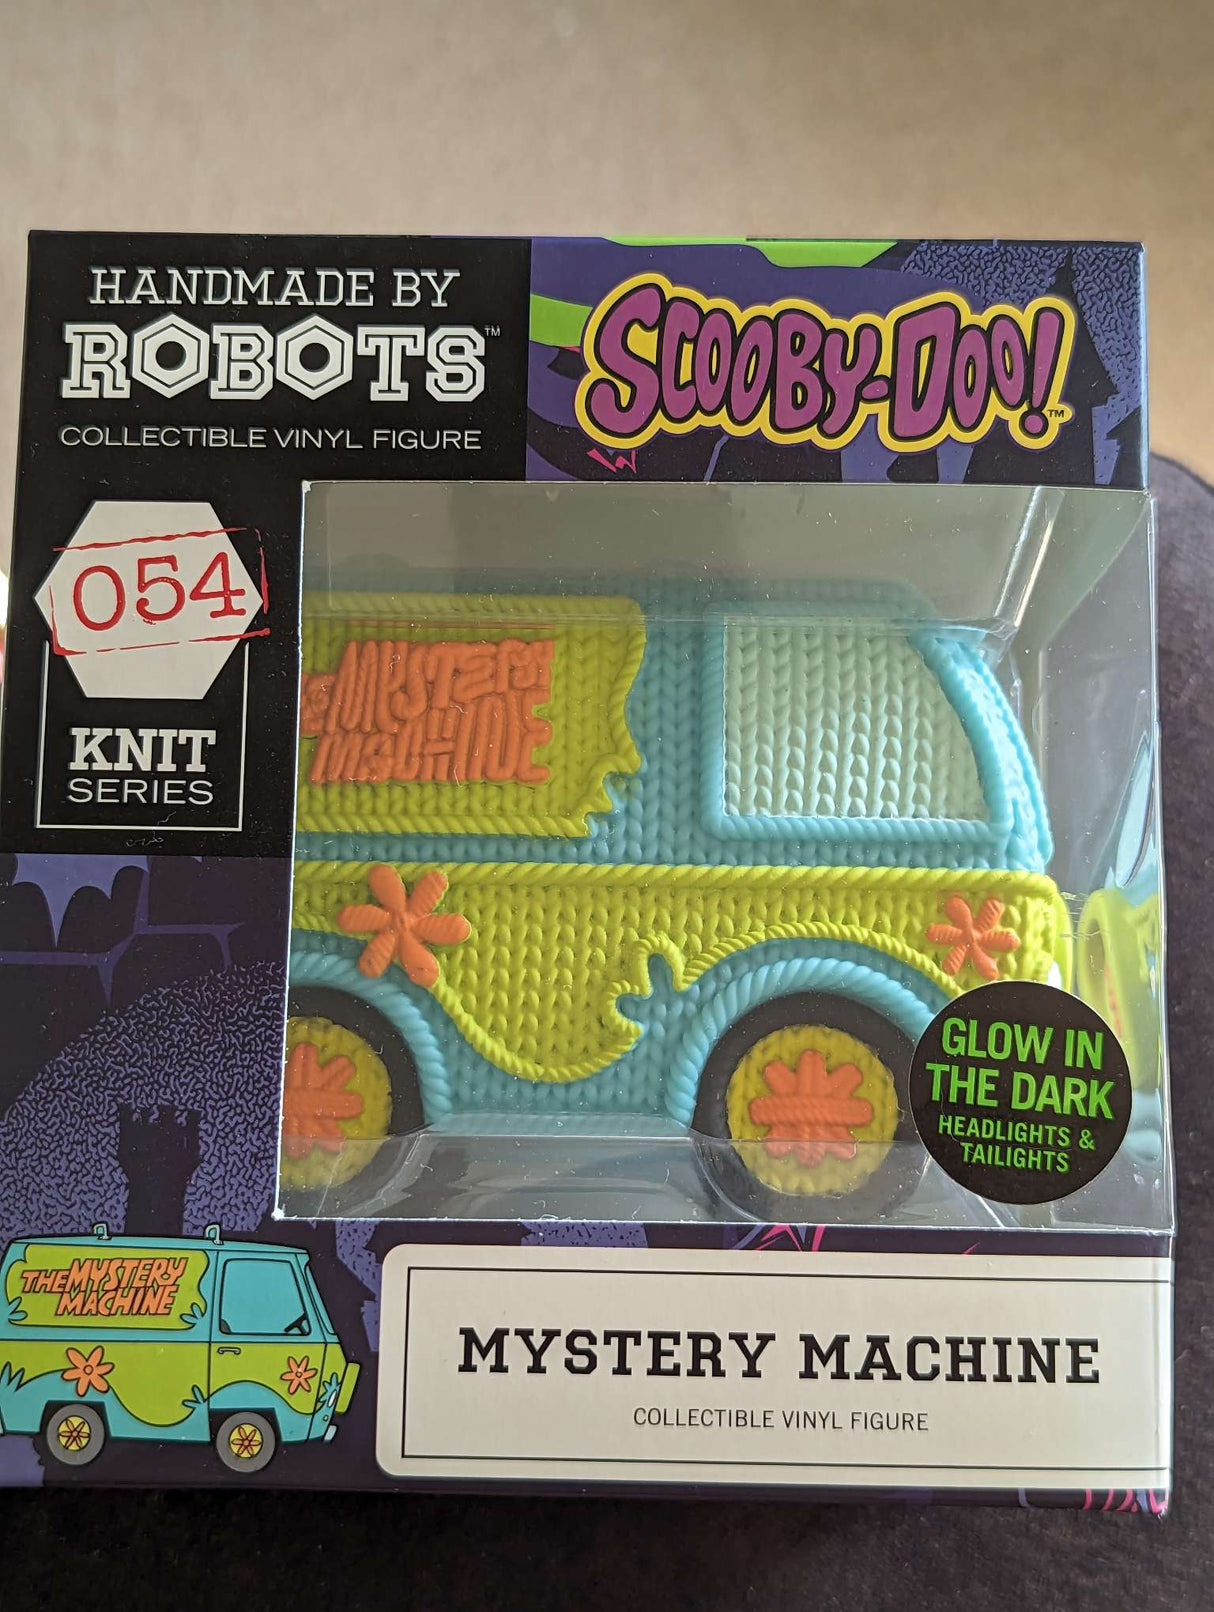 Scooby-Doo Mystery Machine Vinyl Figure - Handmade by Robots